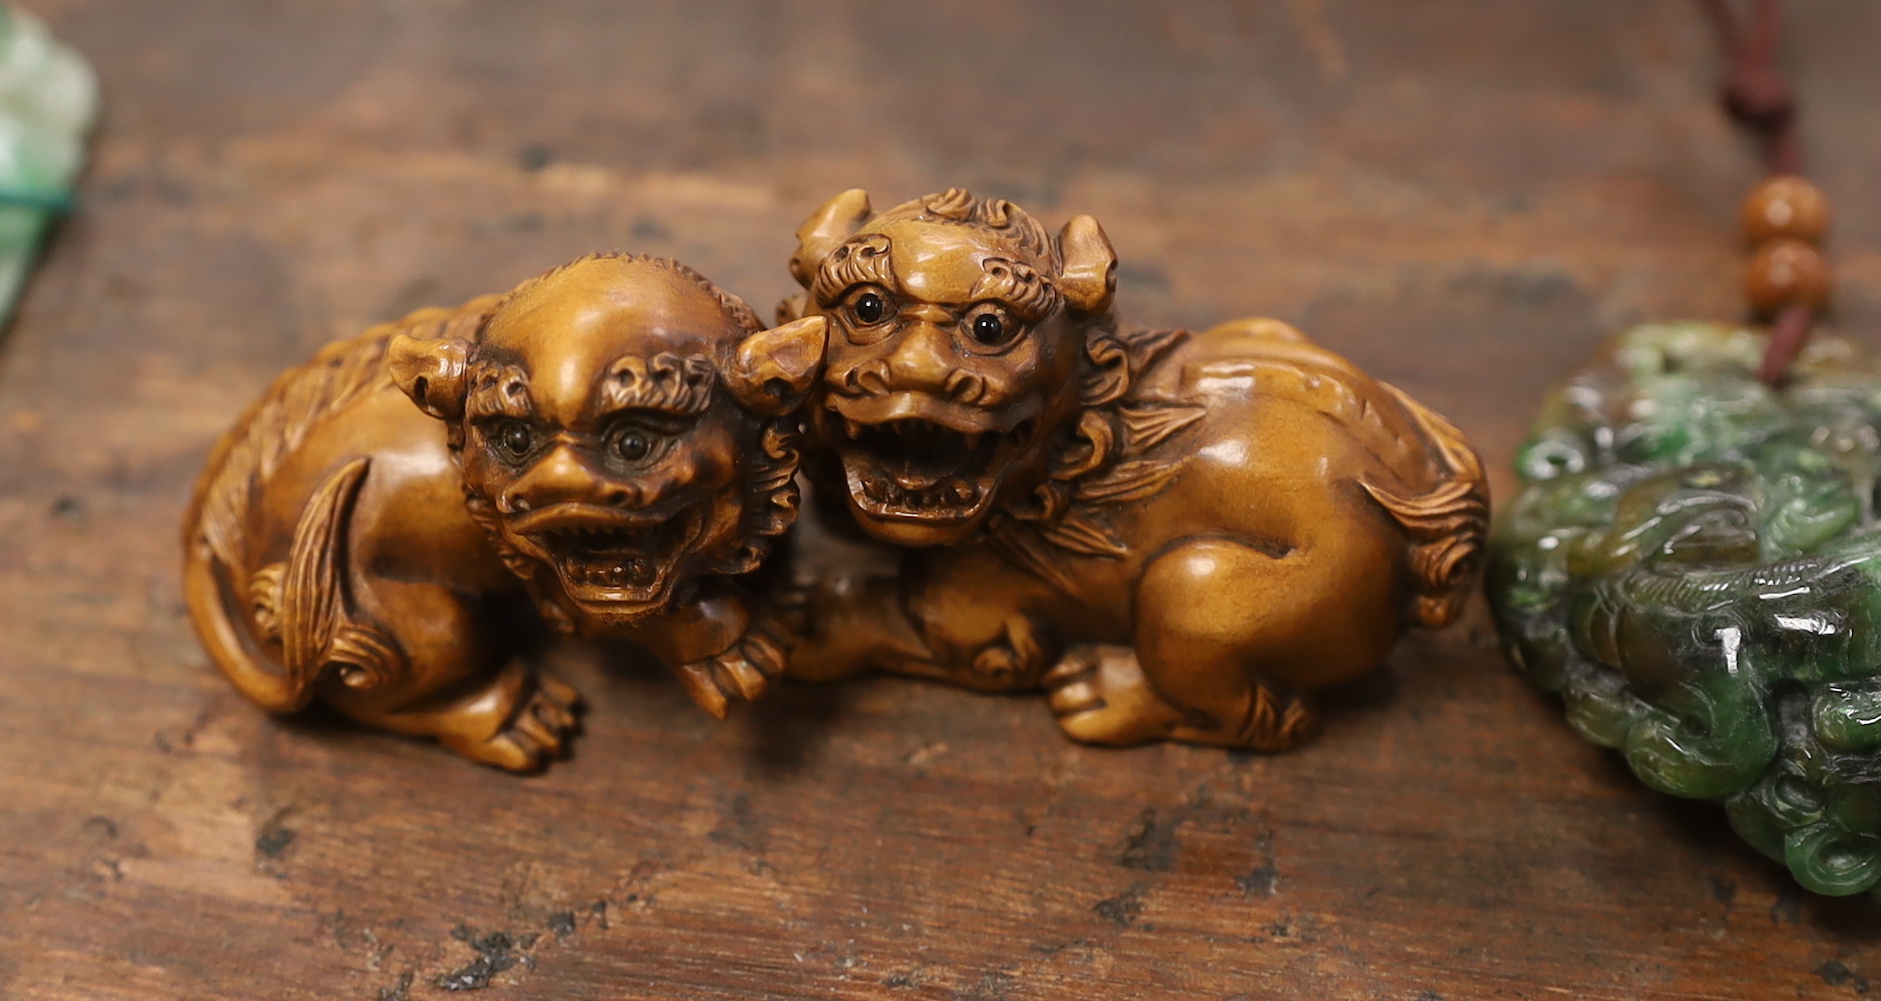 Five Chinese jadeite pendants and two wood lion-dog netsuke, netsuke 3.5 high